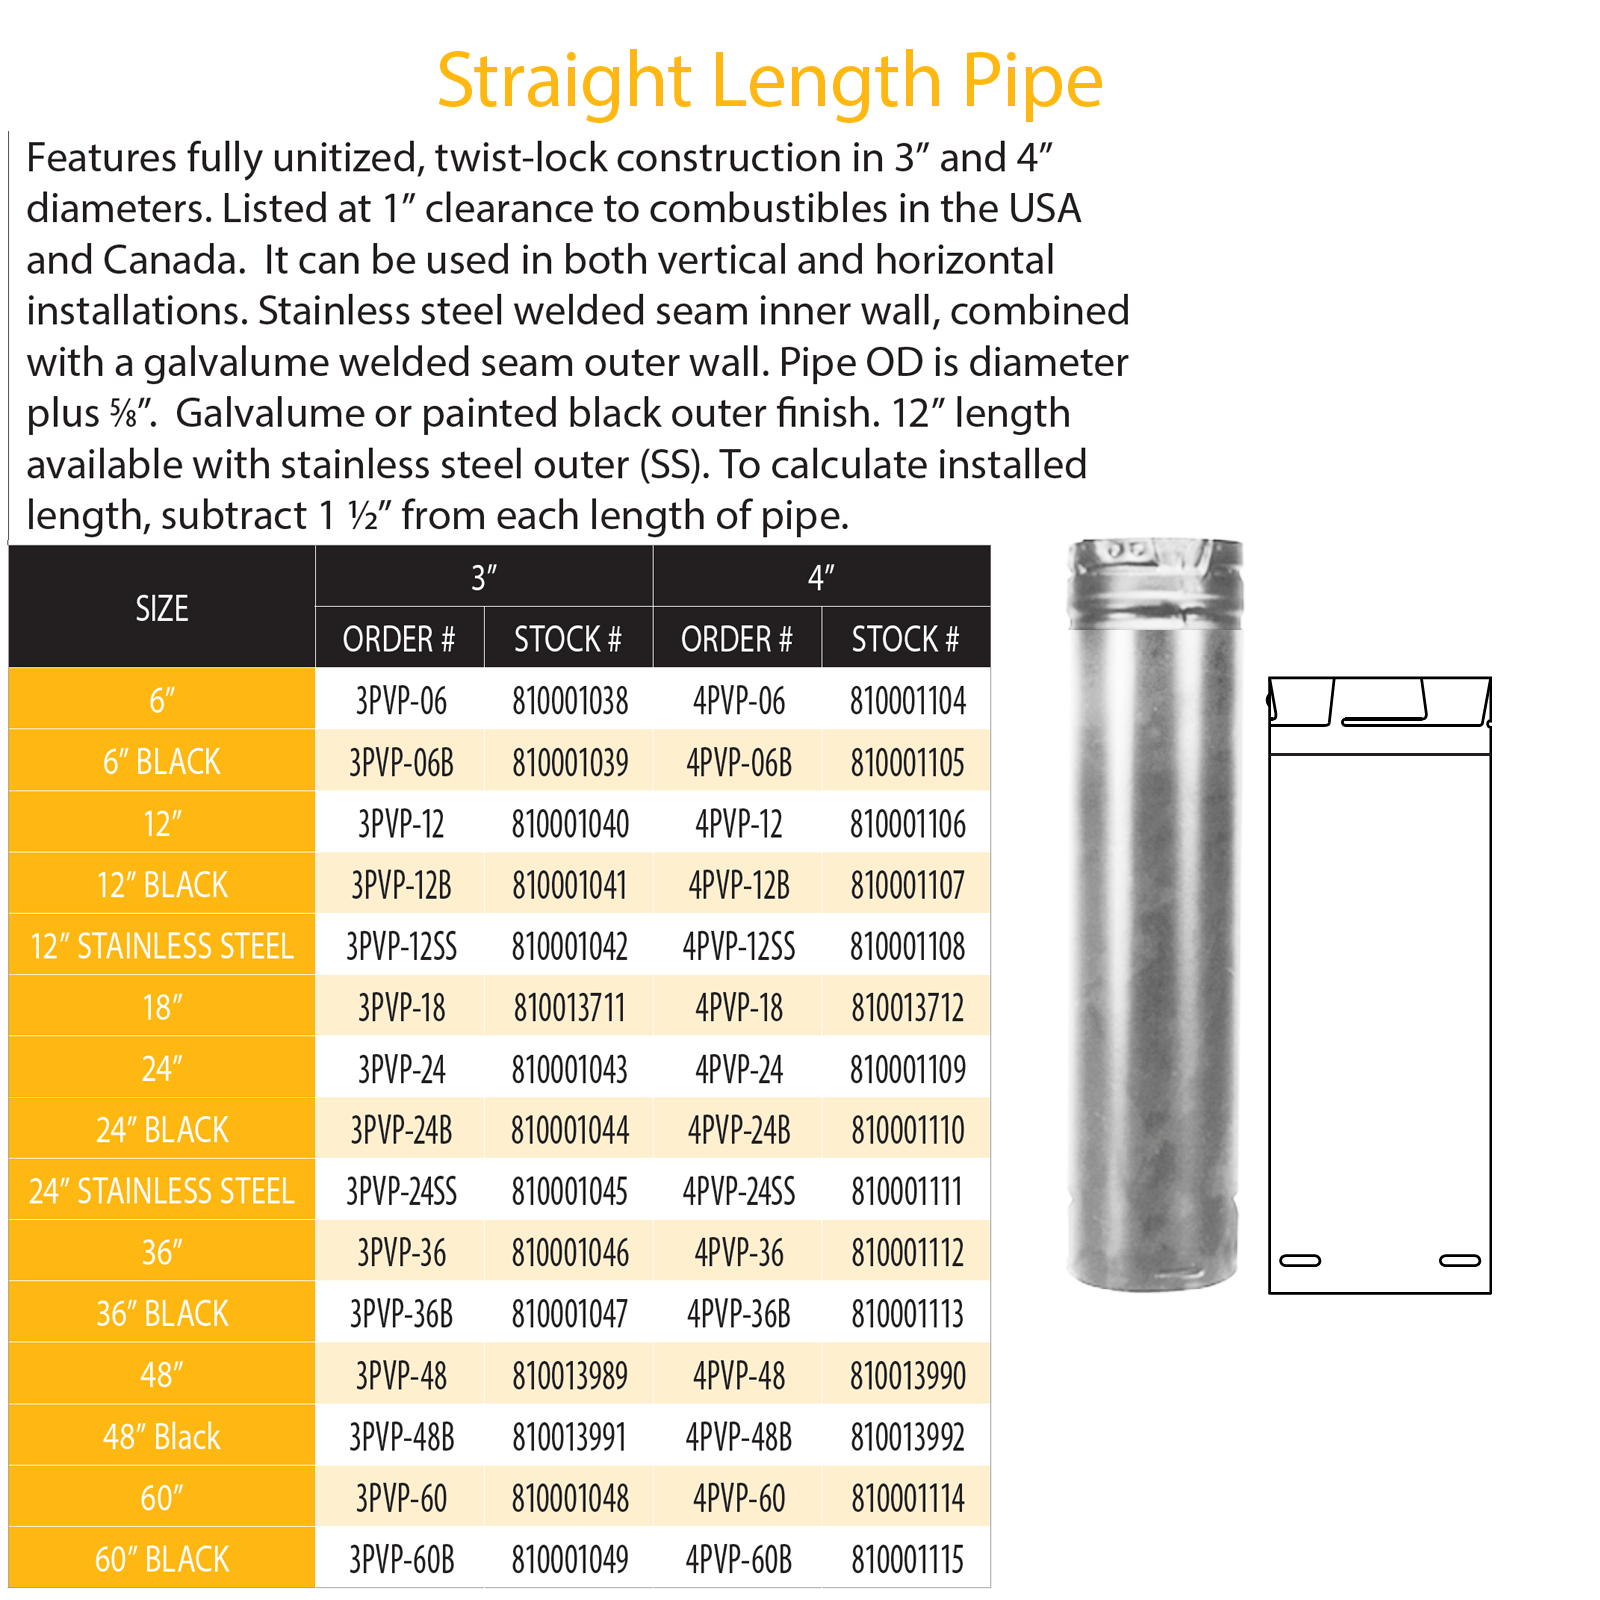 DuraVent 18 PelletVent Pro Straight Length Pipe, 3